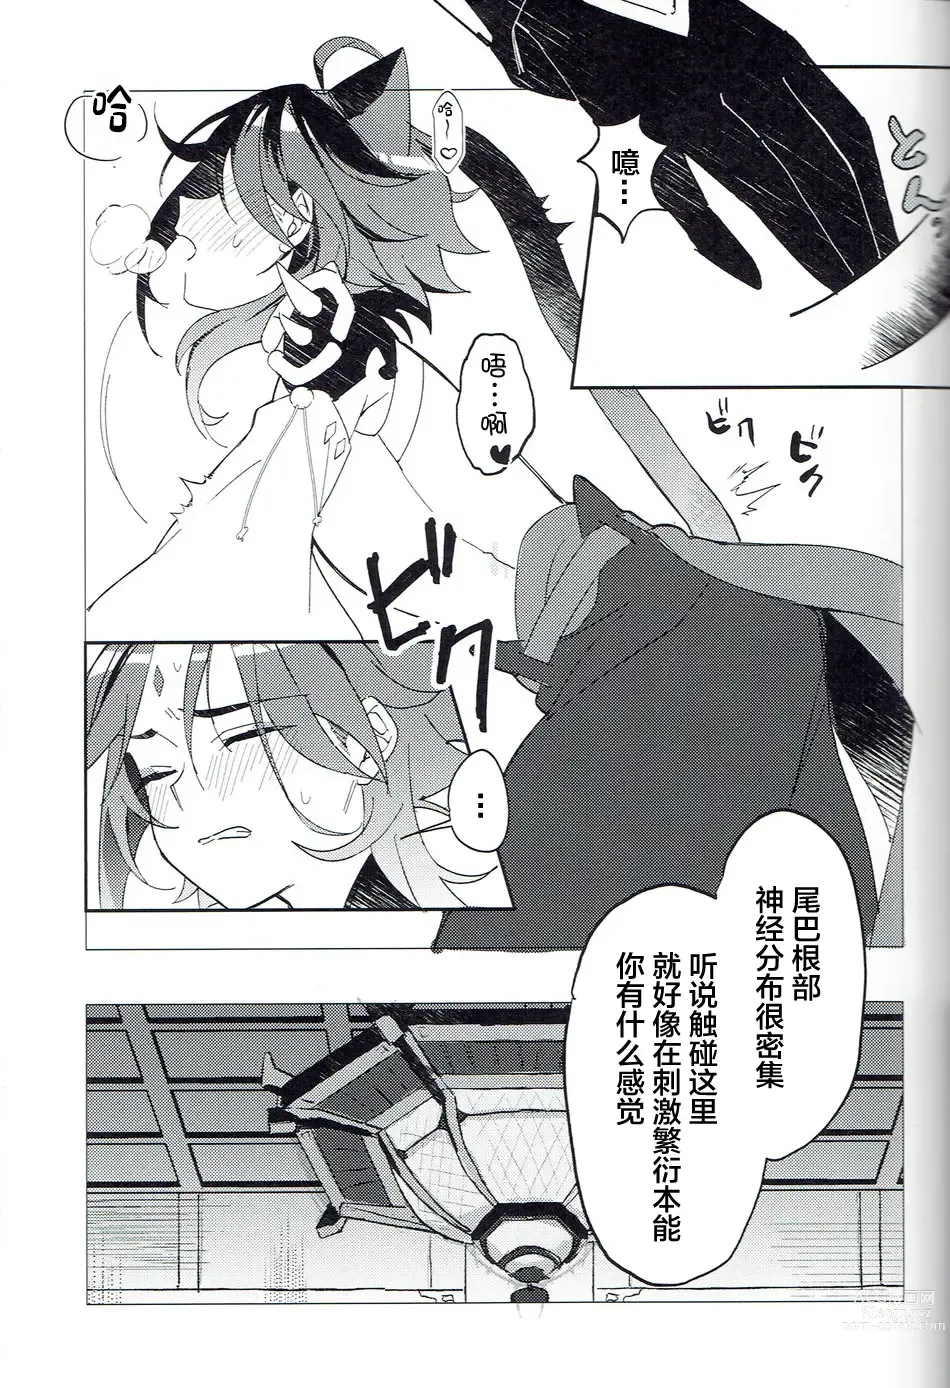 Page 10 of doujinshi Soredokoro dewa nai